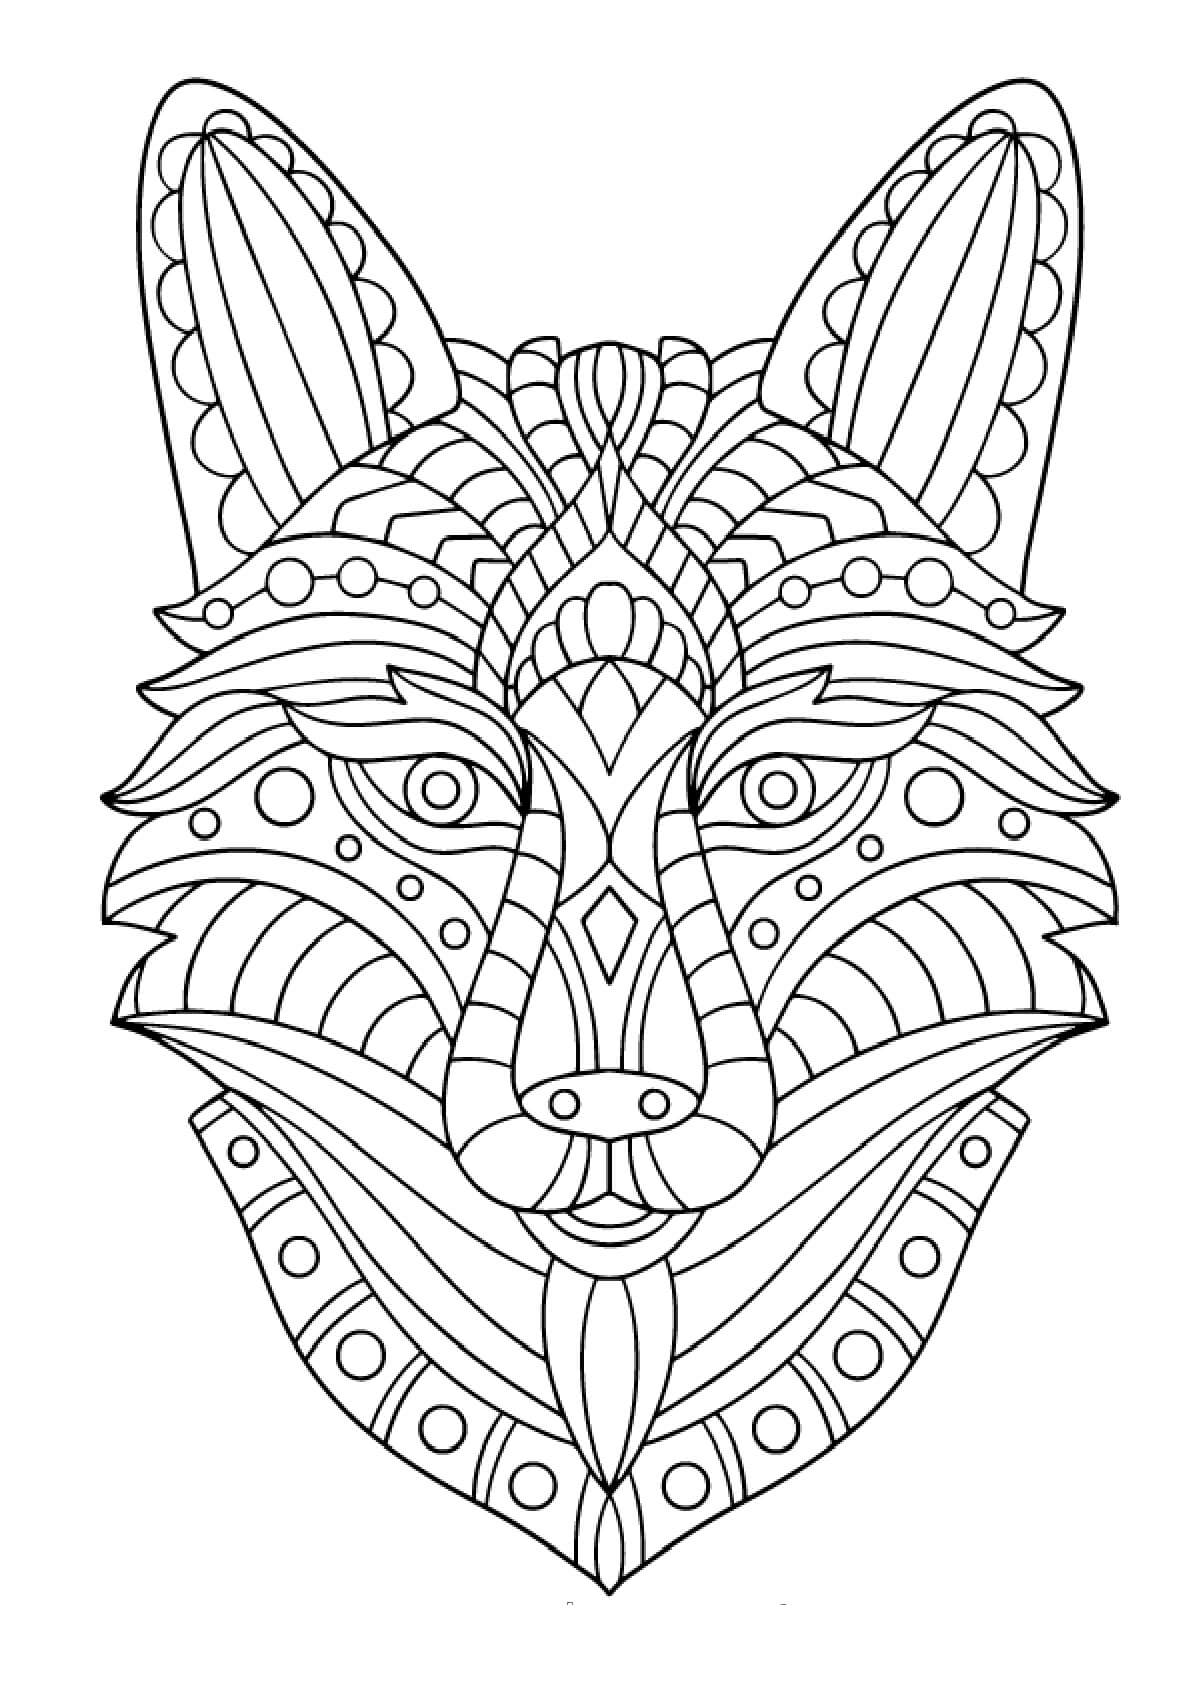 Mandala Wolf Coloring Page - Sheet 2 Mandalas